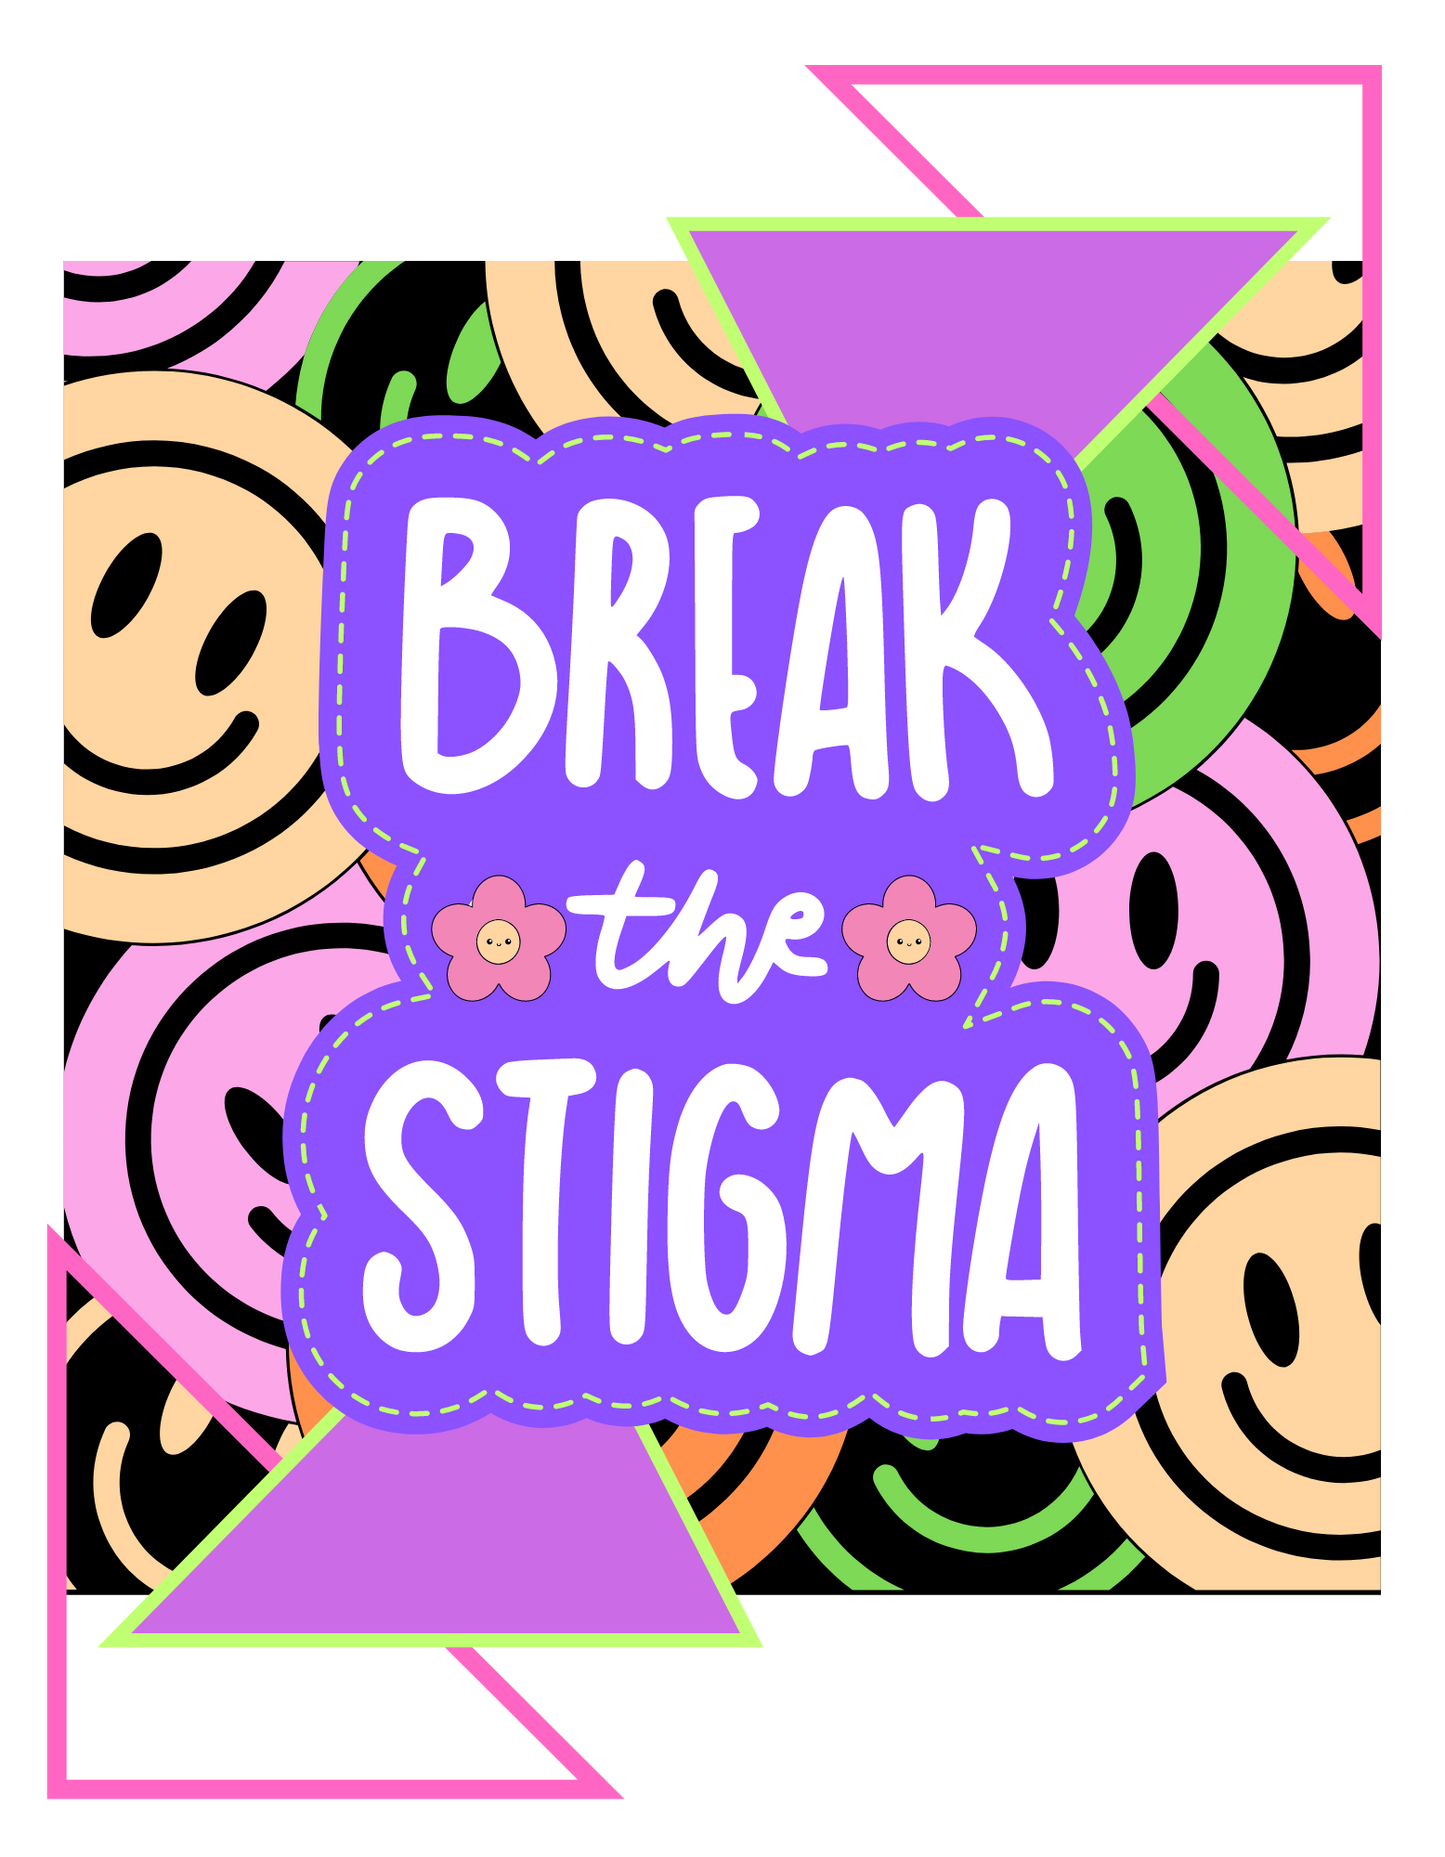 Break The Stigma